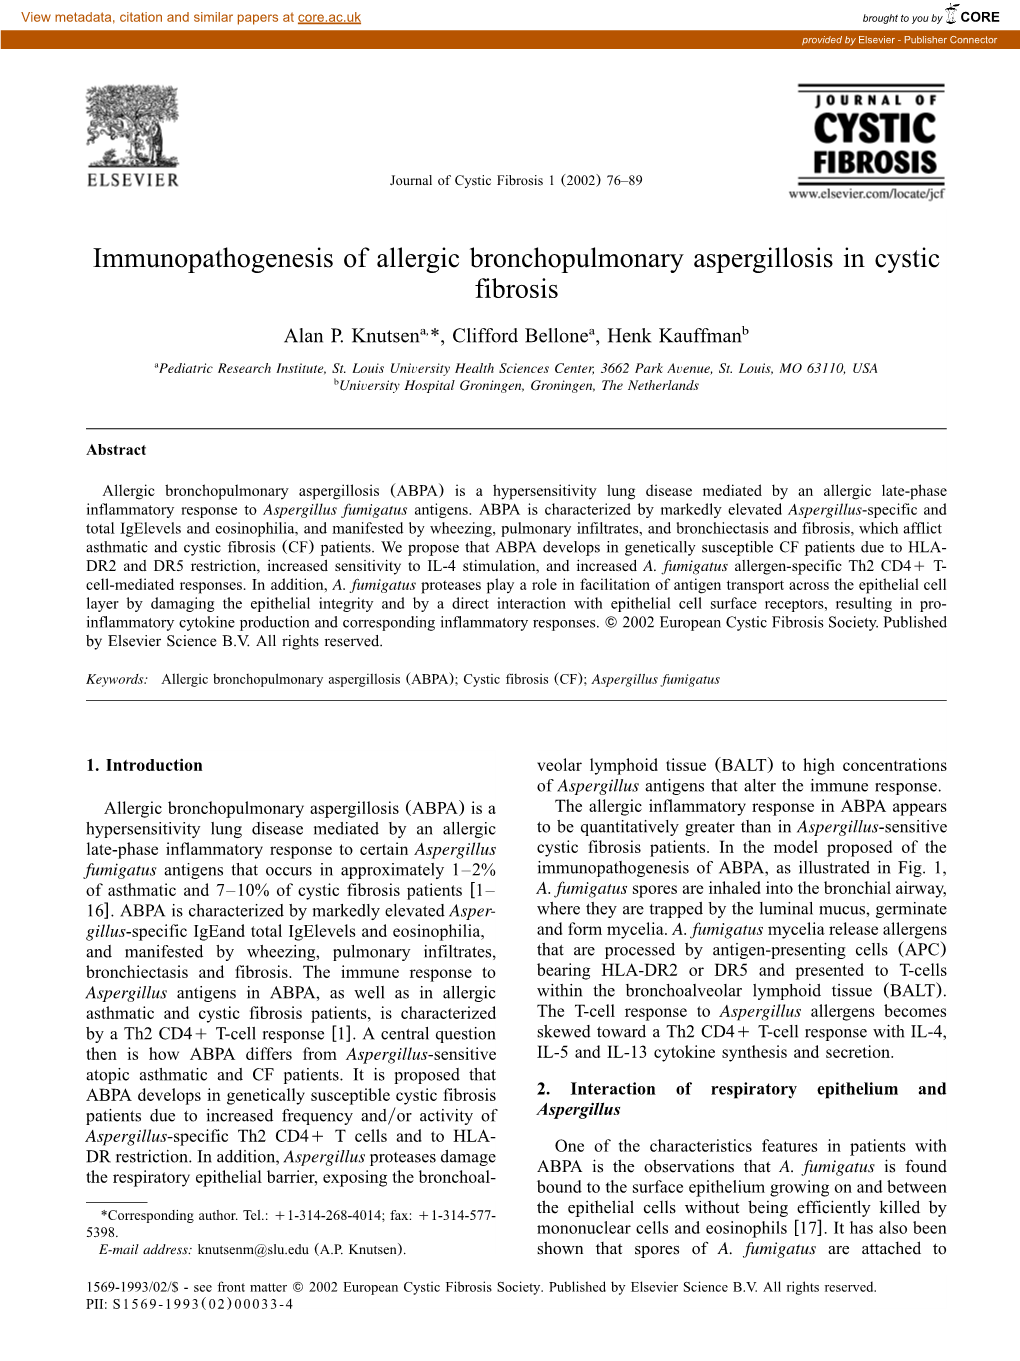 Immunopathogenesis of Allergic Bronchopulmonary Aspergillosis in Cystic Fibrosis